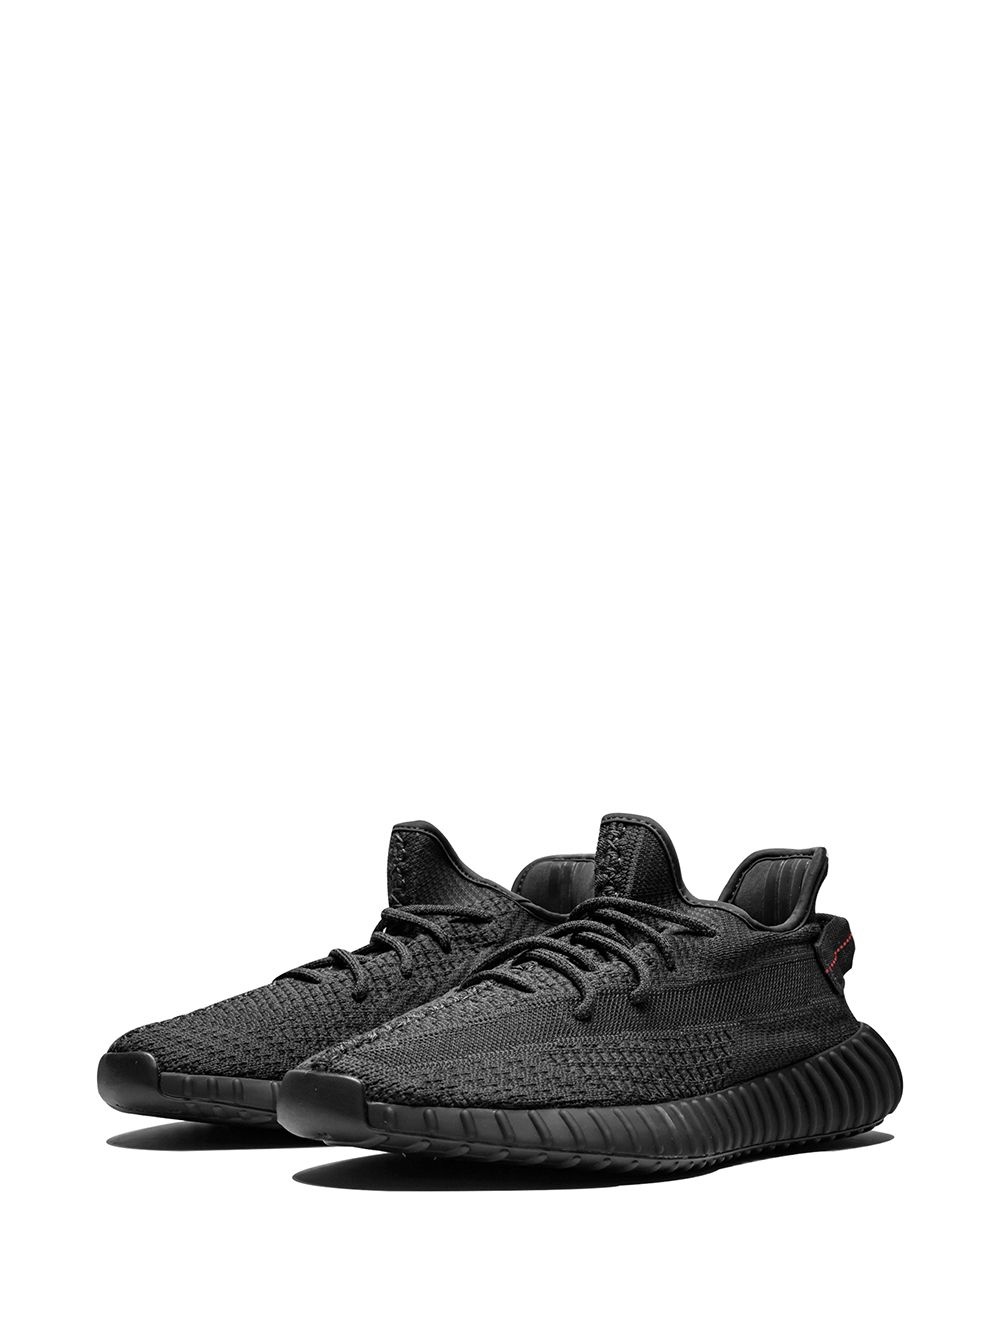 Yeezy Boost 350 V2  "Black Static" sneakers - 2